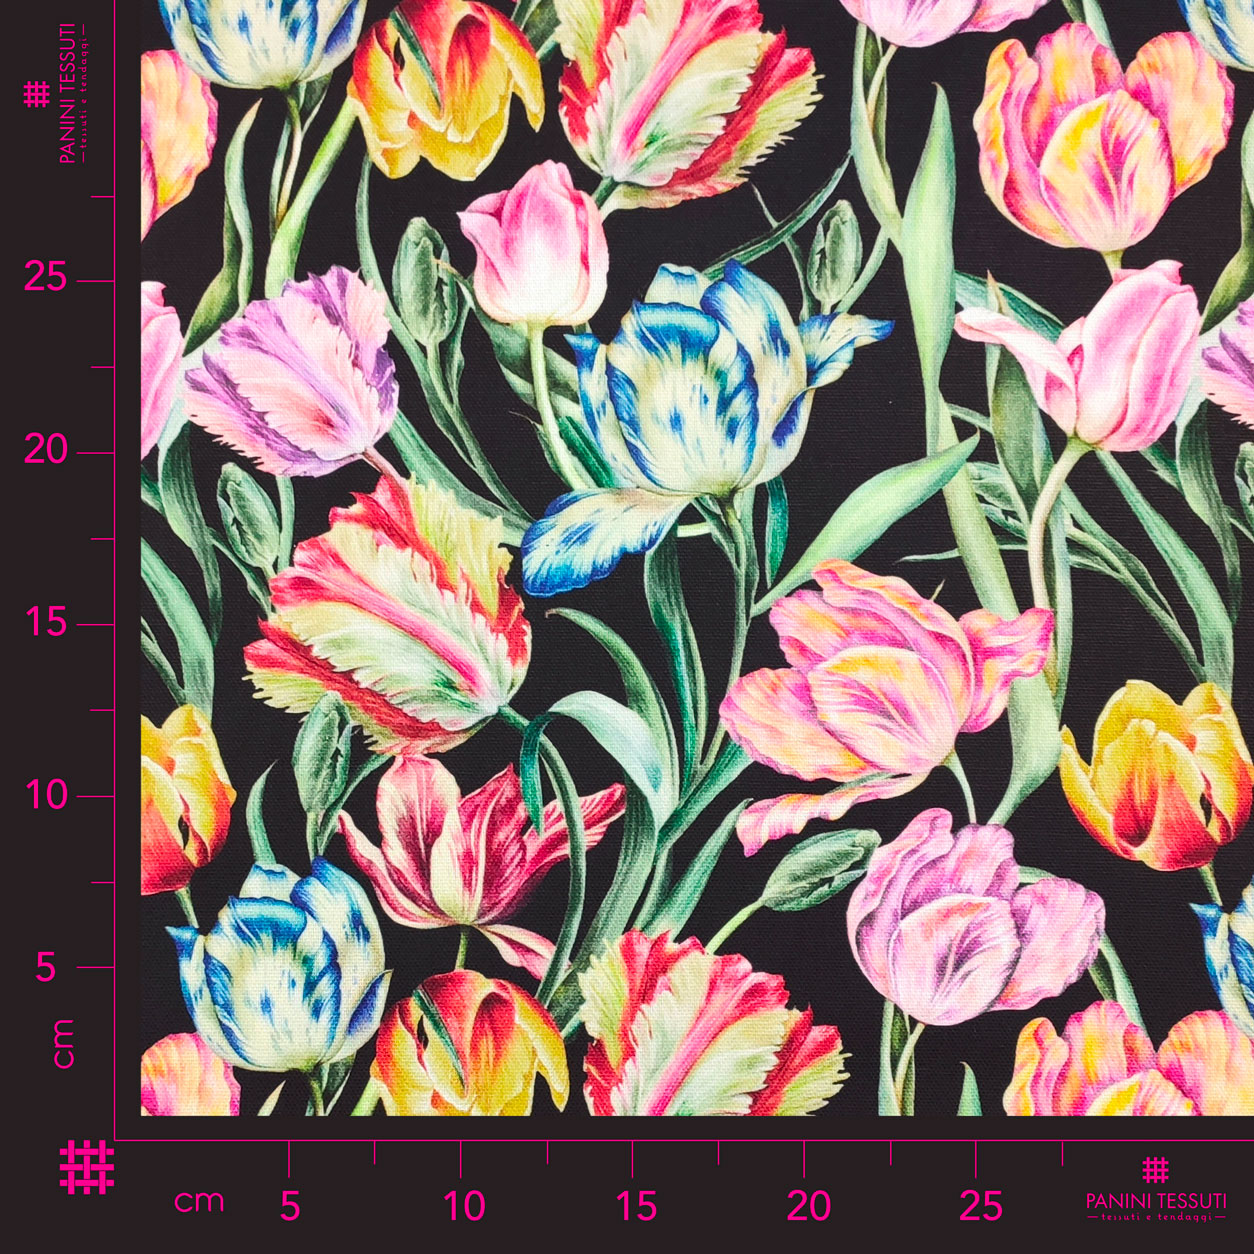 panama-tessuto-tulipani-colorati